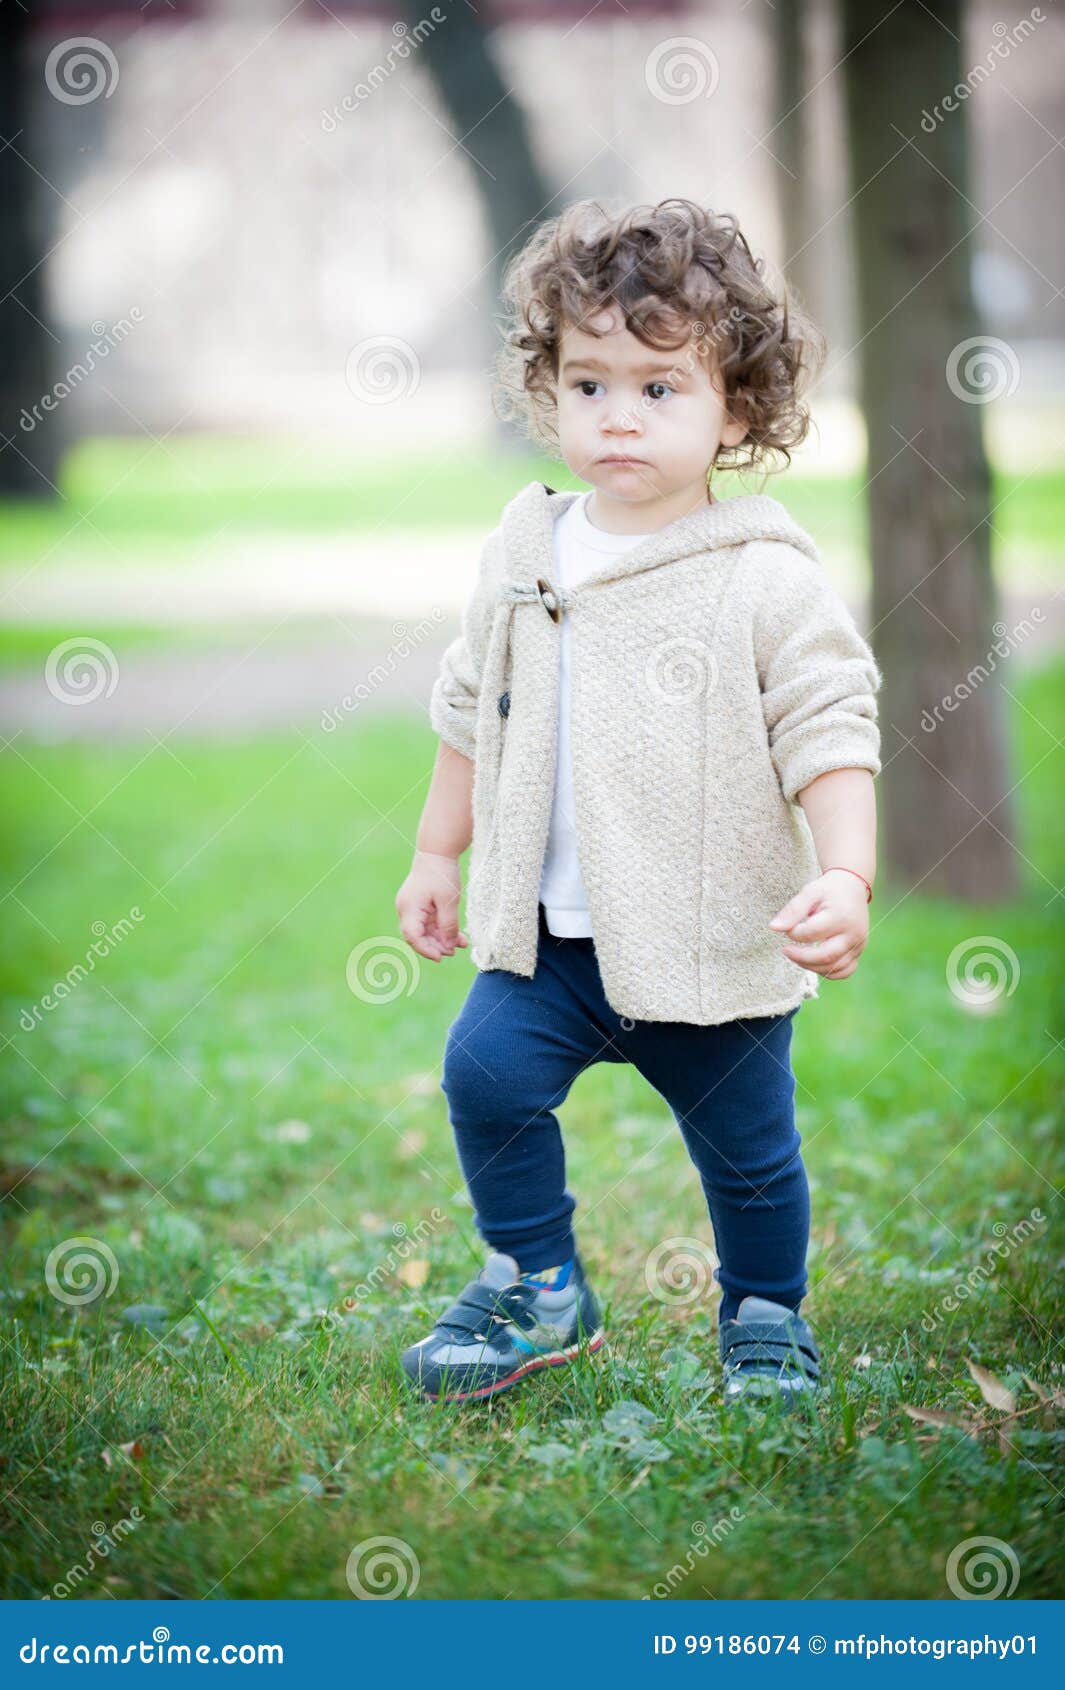 Beautiful child stock photo. Image of outdoors, nature - 99186074